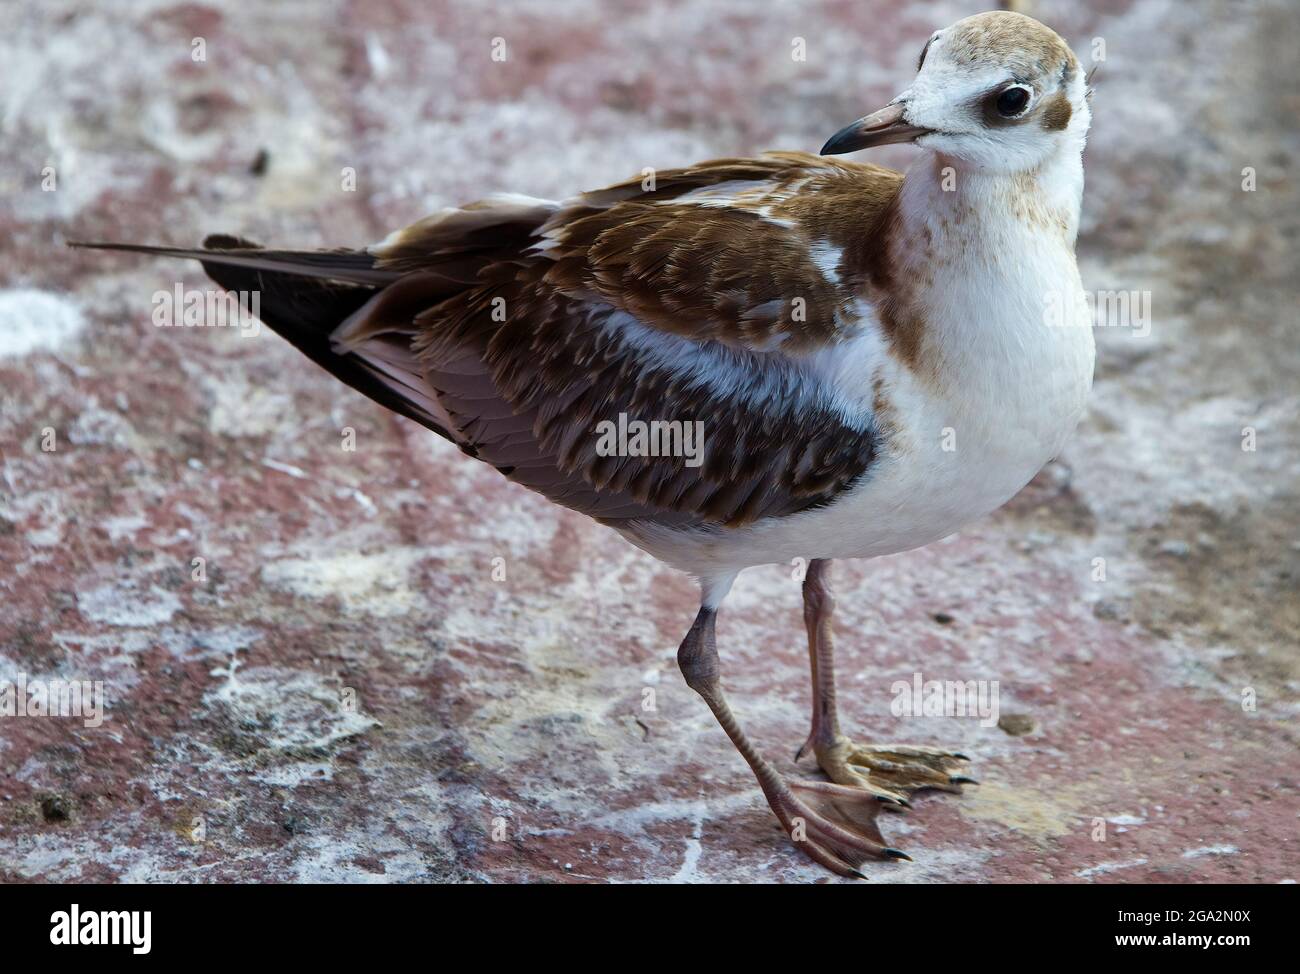 A seagull on the coastal rocks poses for a photographer. Stock Photo